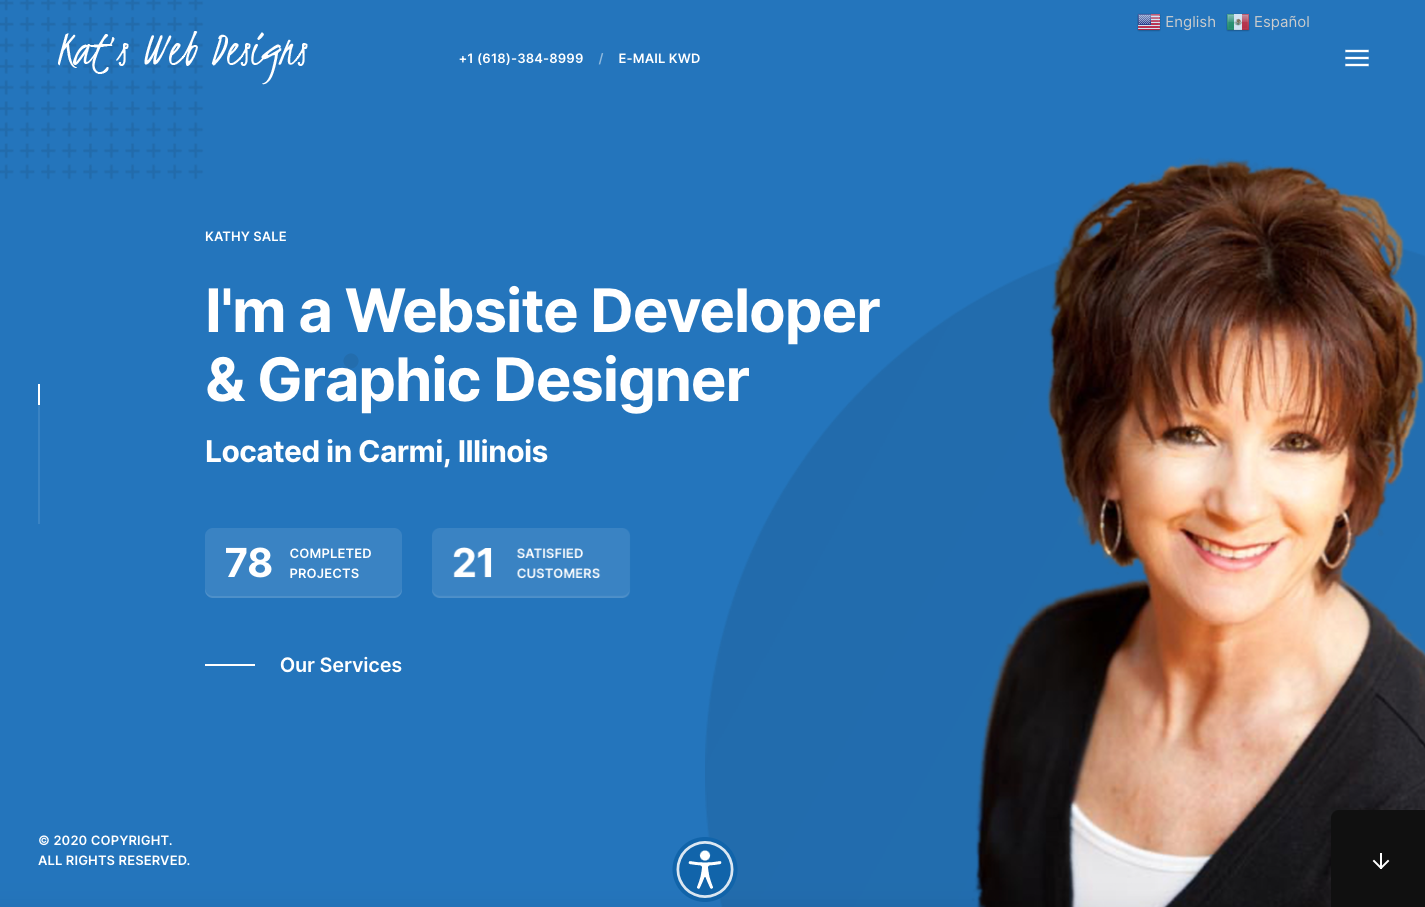 (c) Katswebdesigns.com